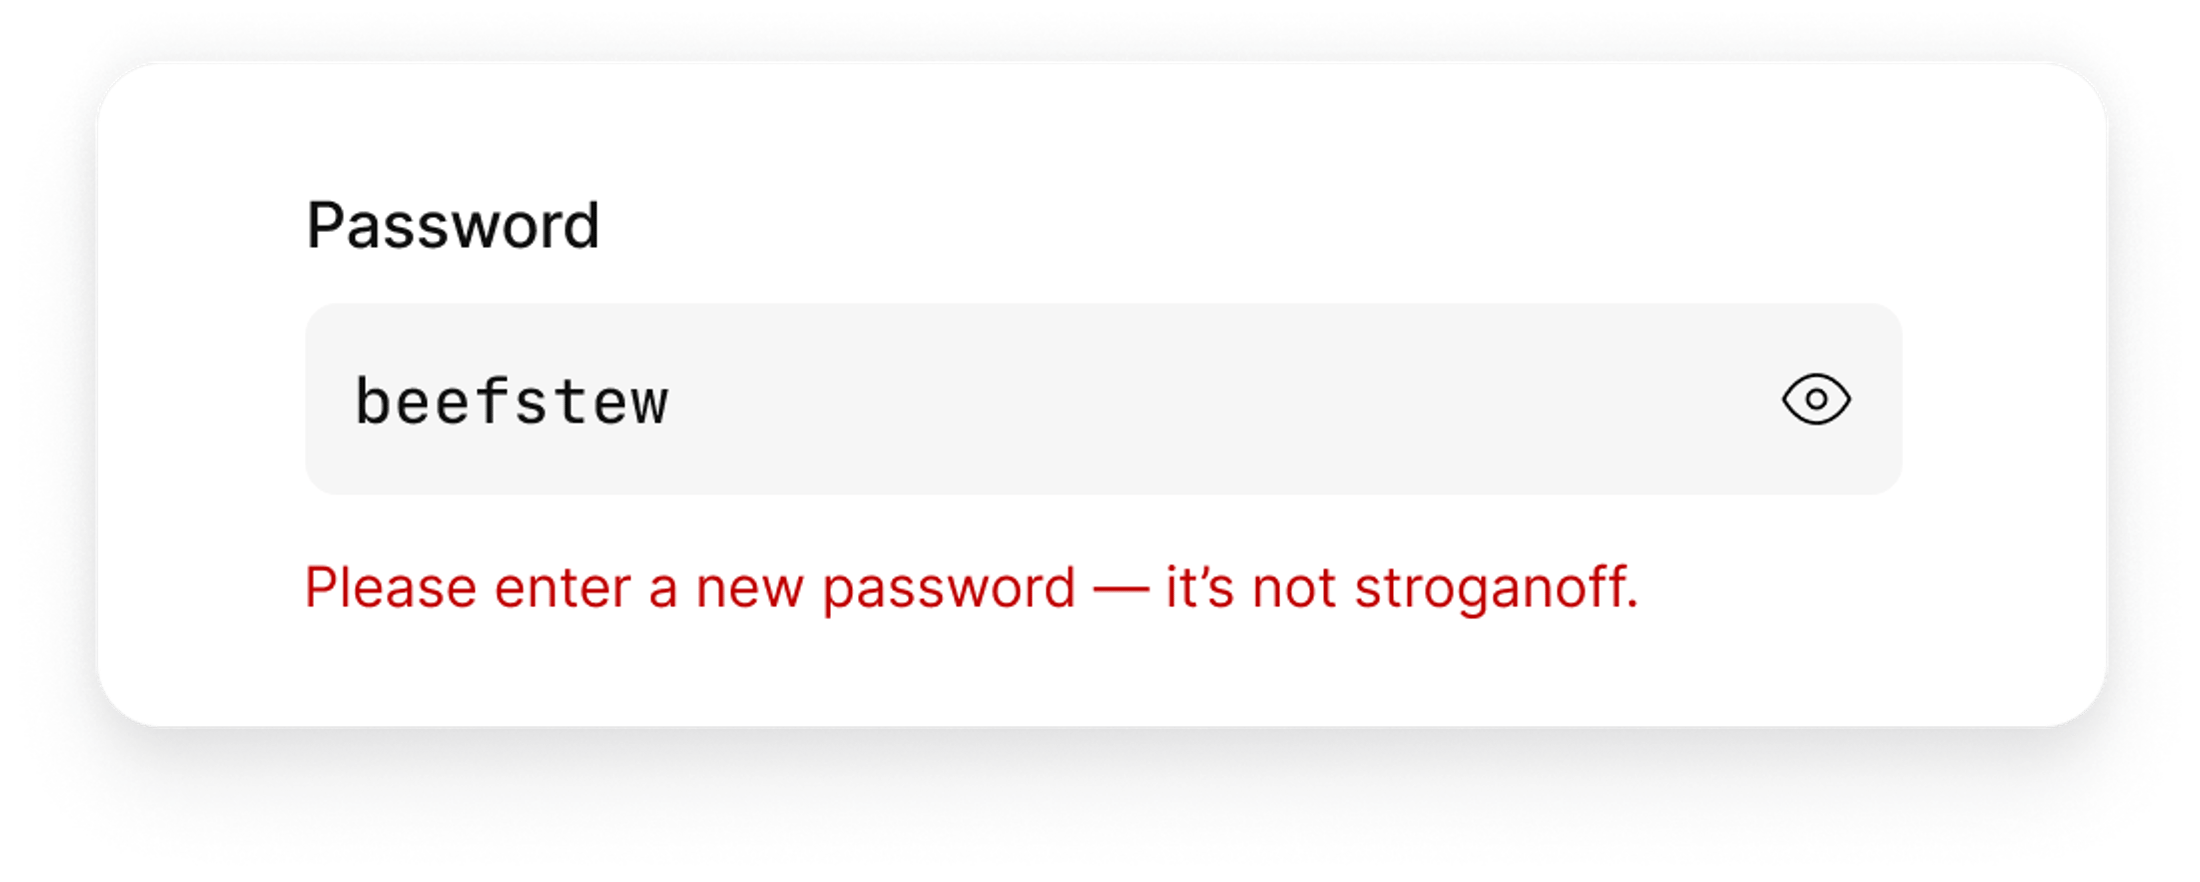 Kinde UI image showing a password error